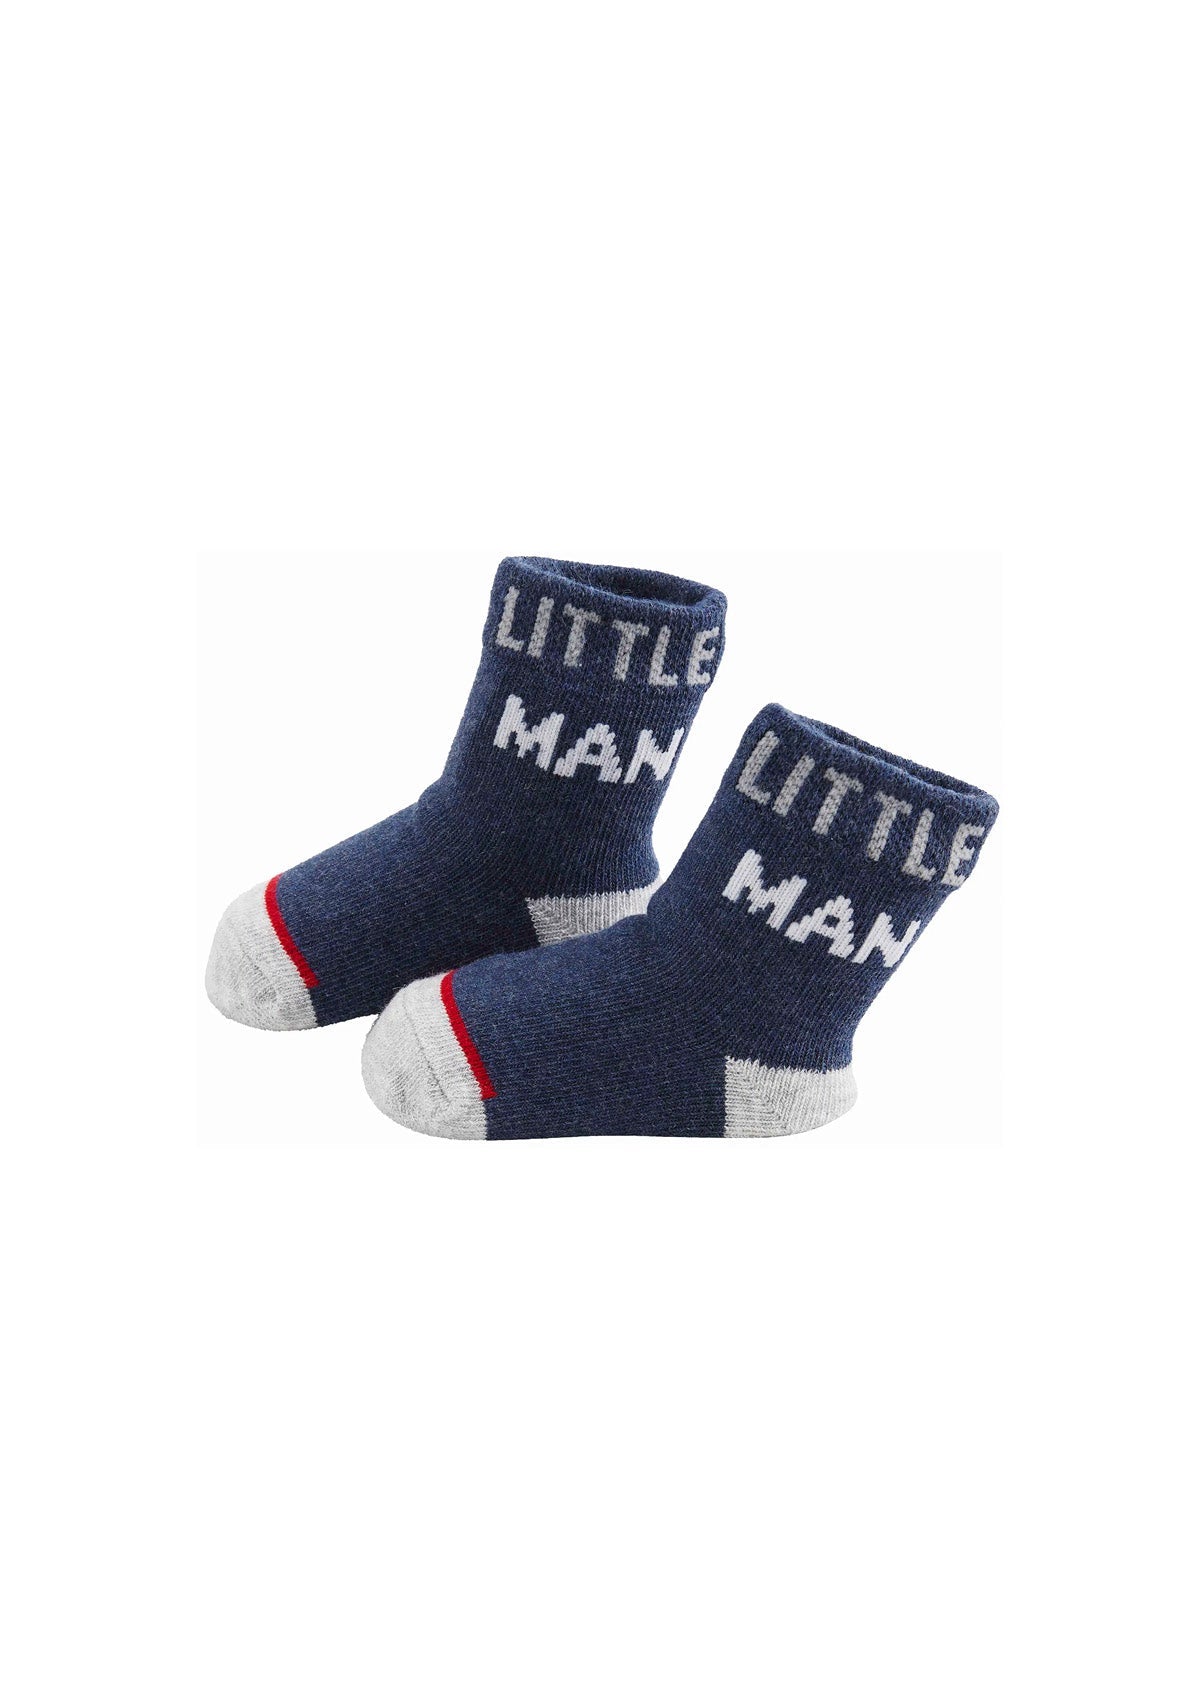 'Little Man' Baby Socks -Mud Pie- Ruby Jane-